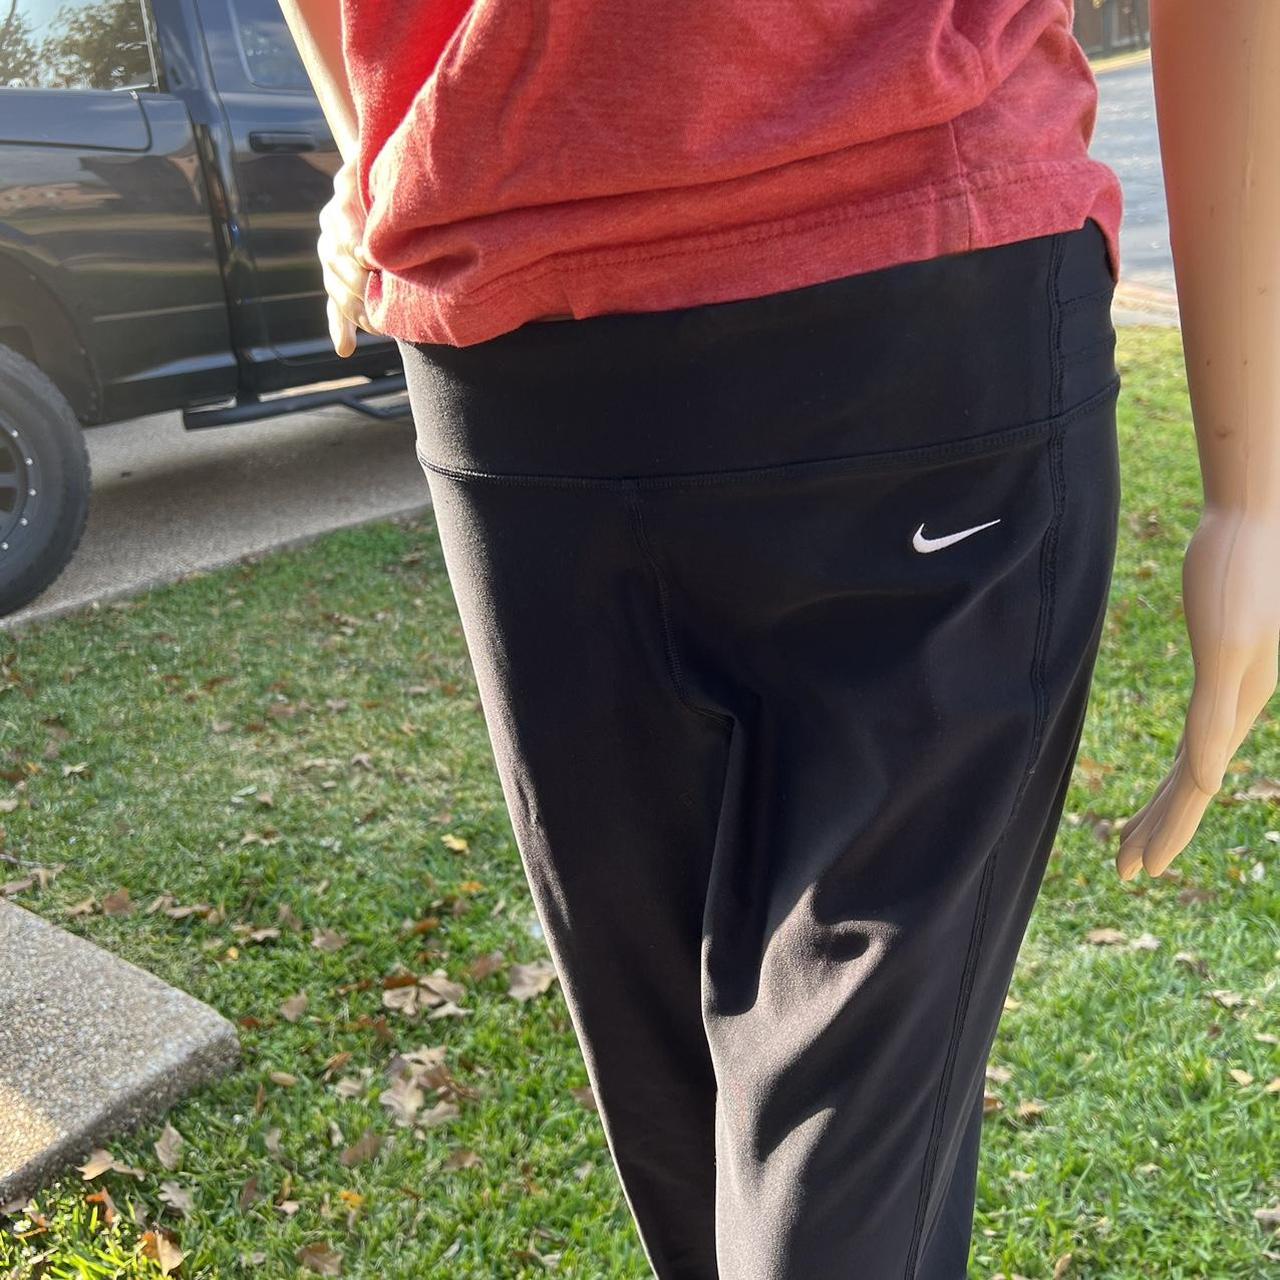 Nike yoga pants / flare leggings Dry fit #gym - Depop